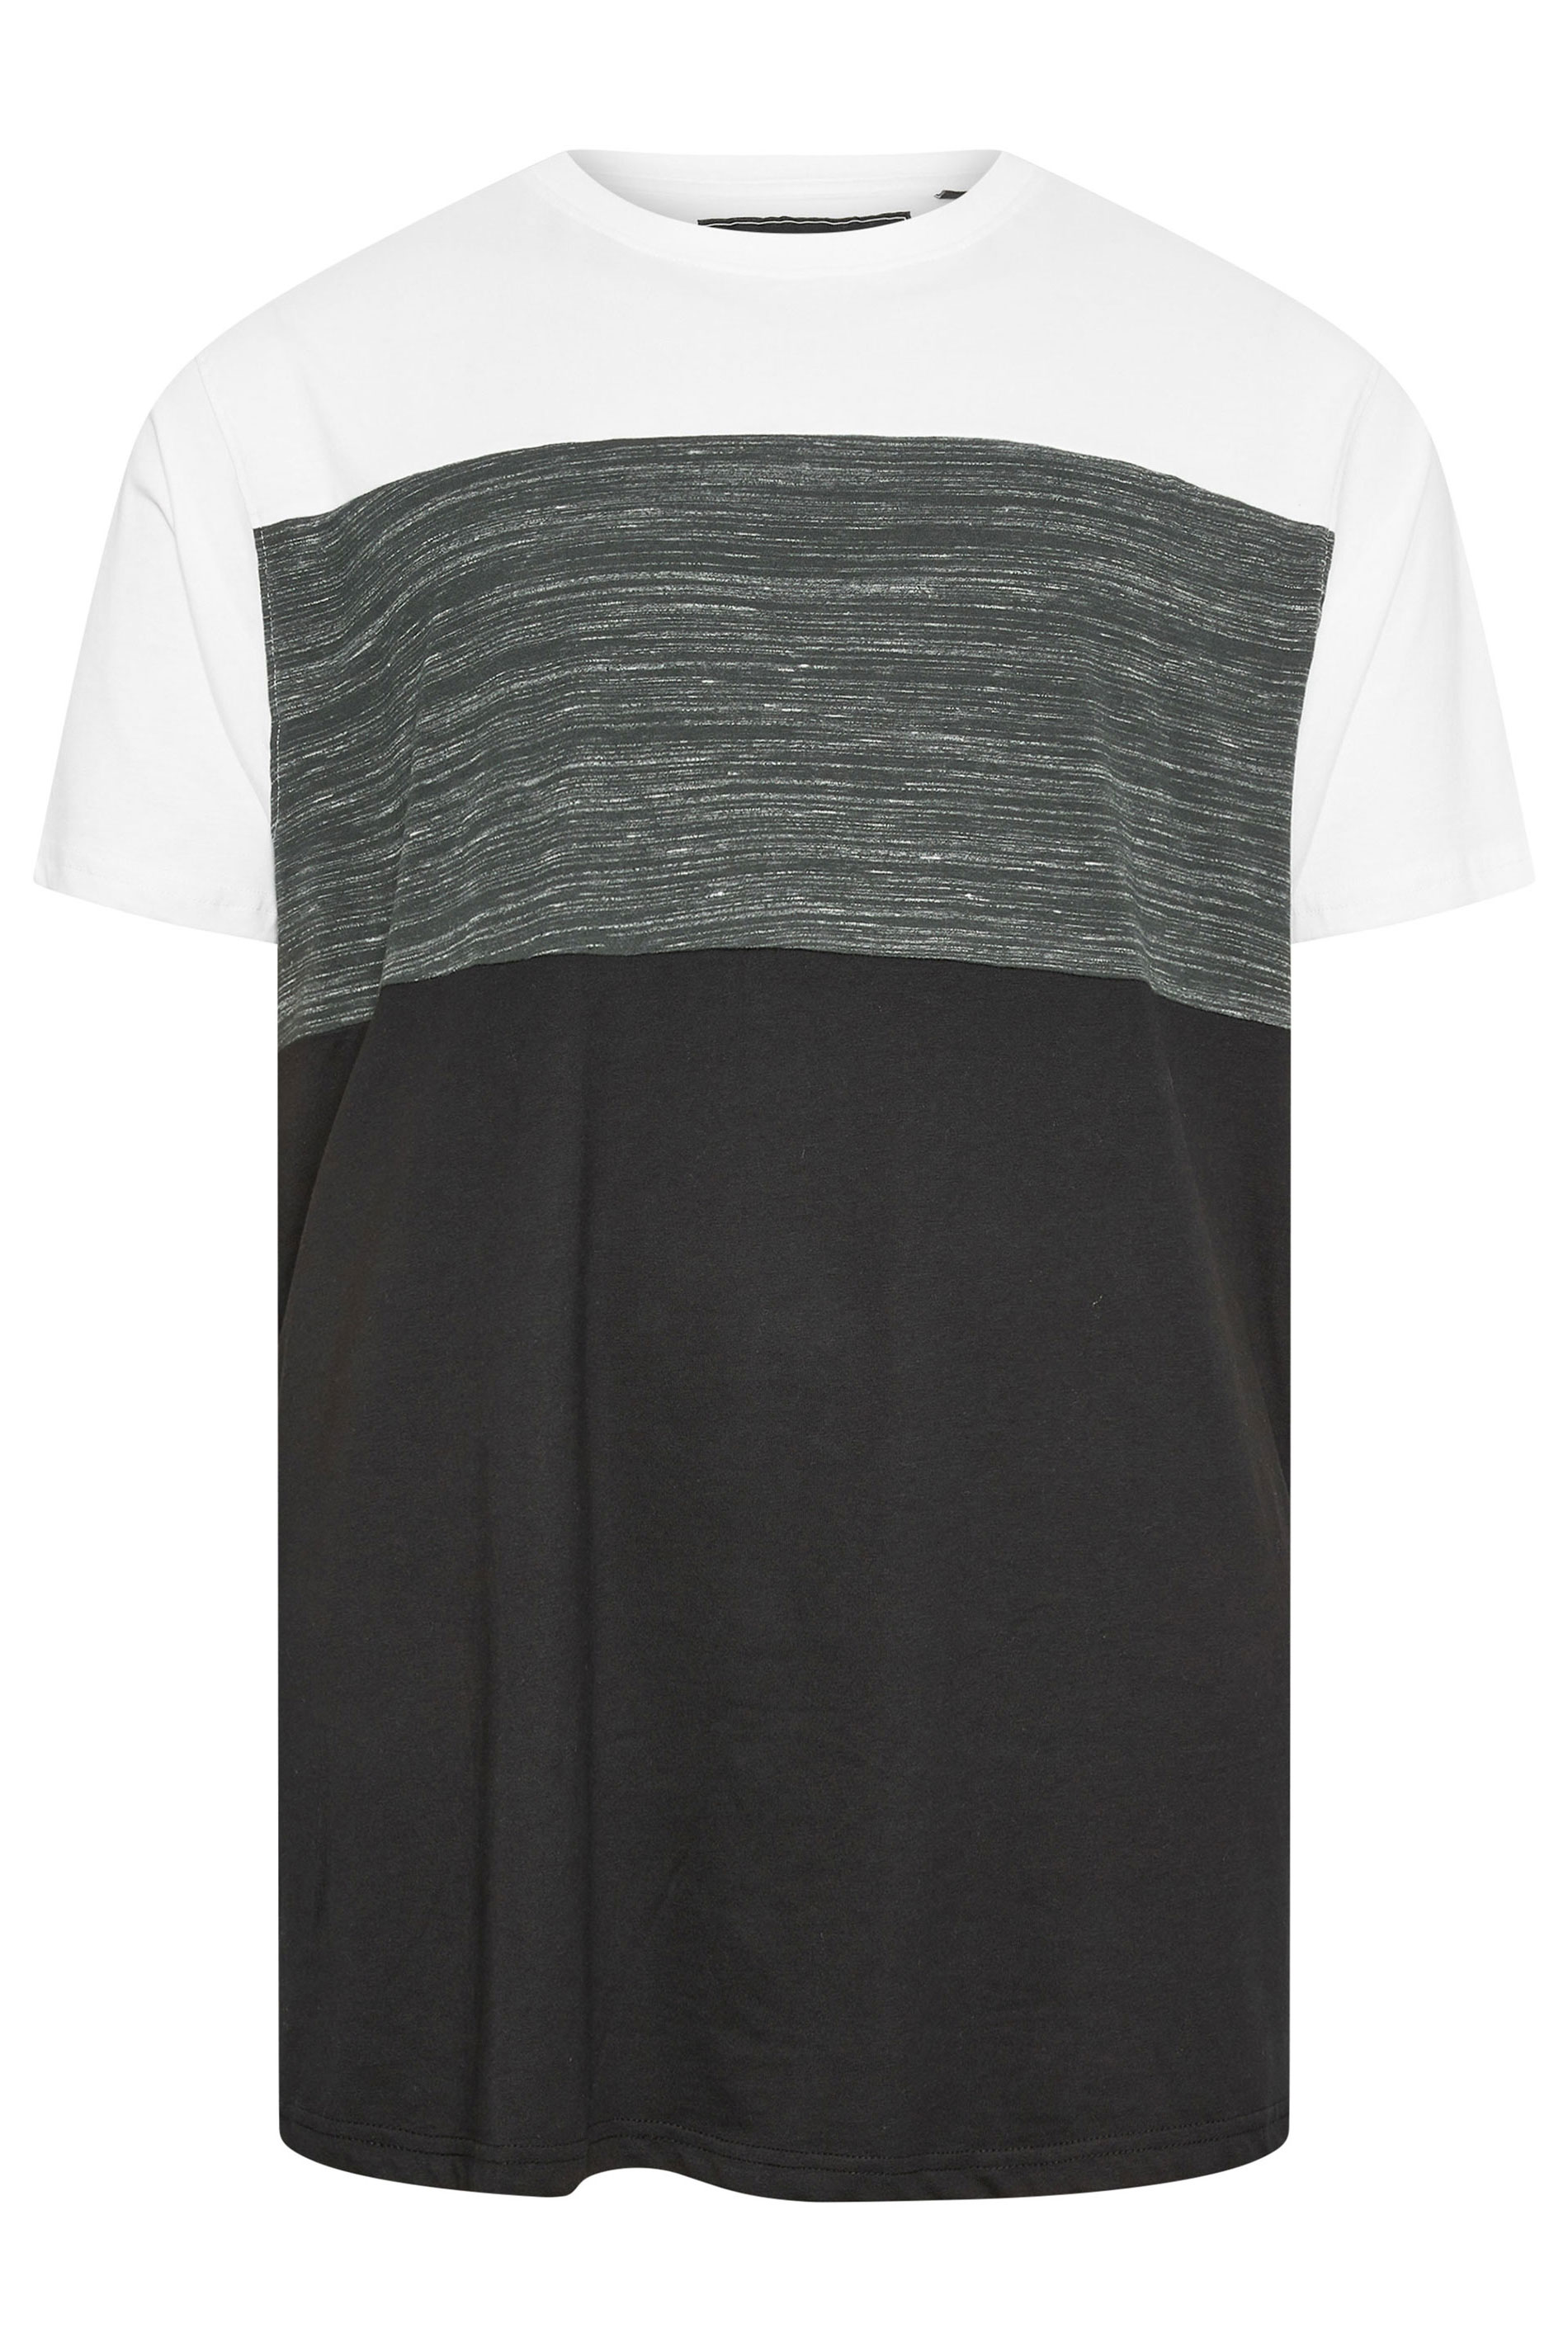 KAM Big & Tall Charcoal Grey Cut & Sew T-Shirt | BadRhino 2